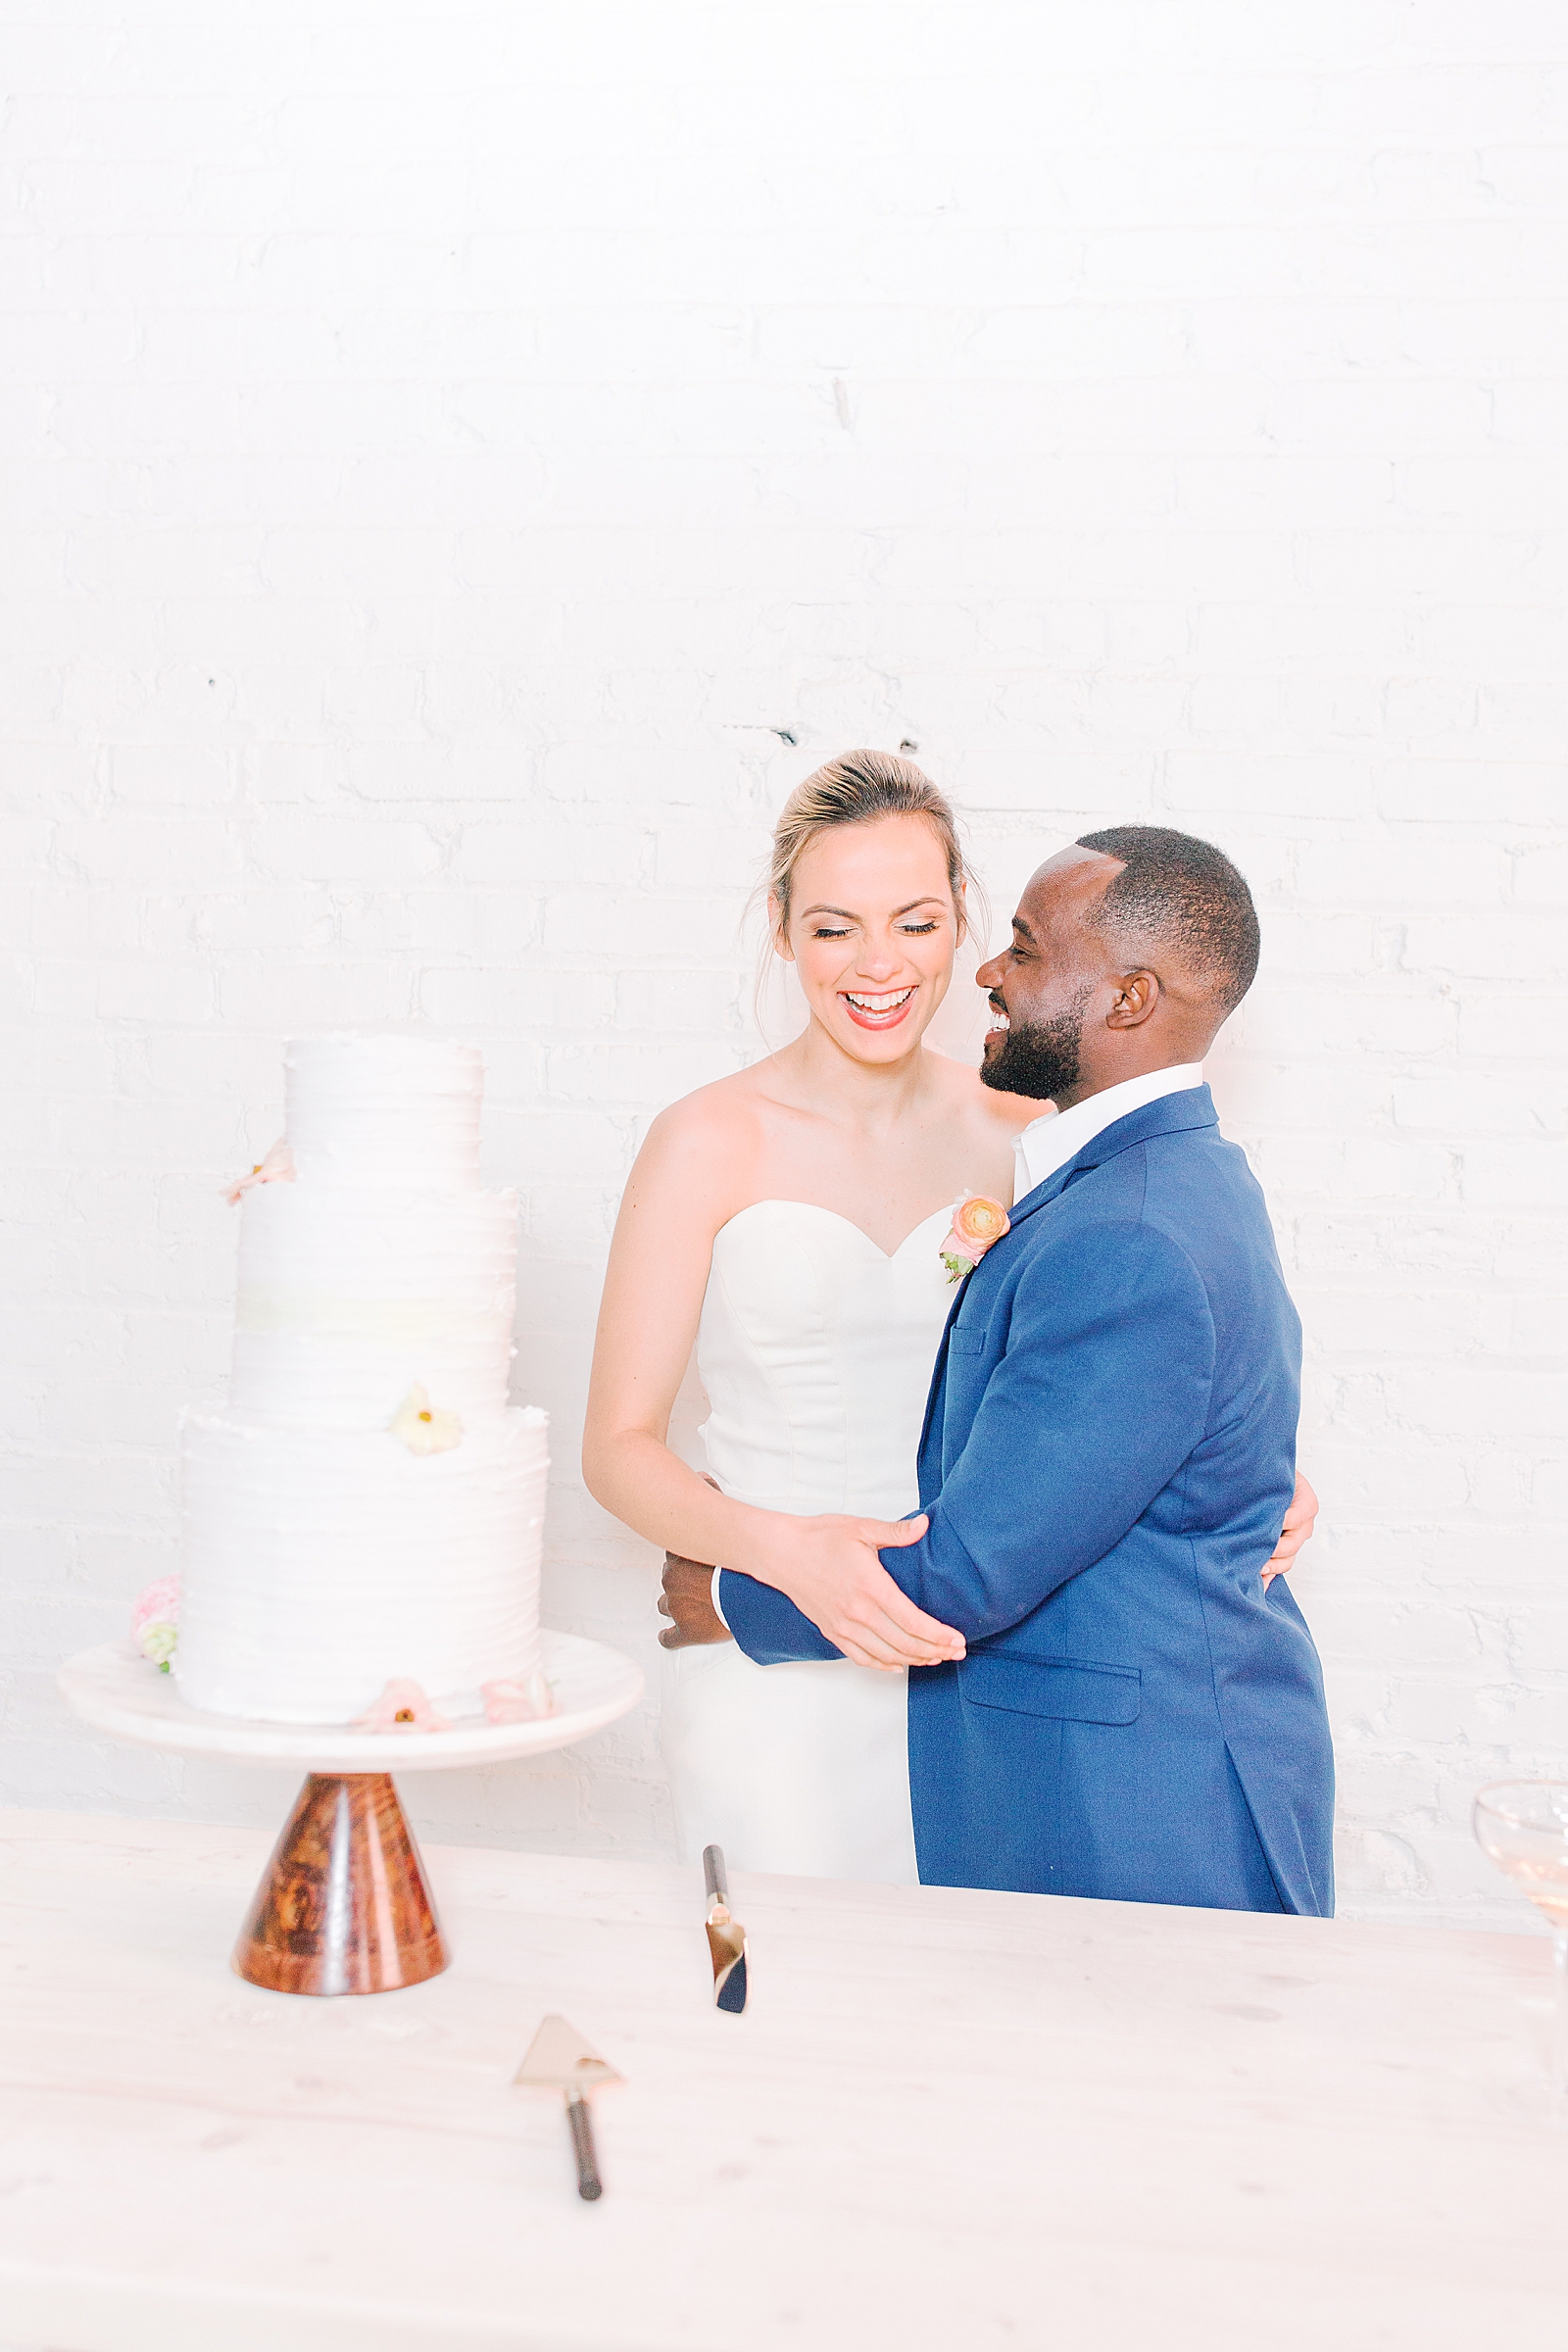 Spring Brickyard Wedding Reception Bride and Groom Cutting Cake Laughing Photo